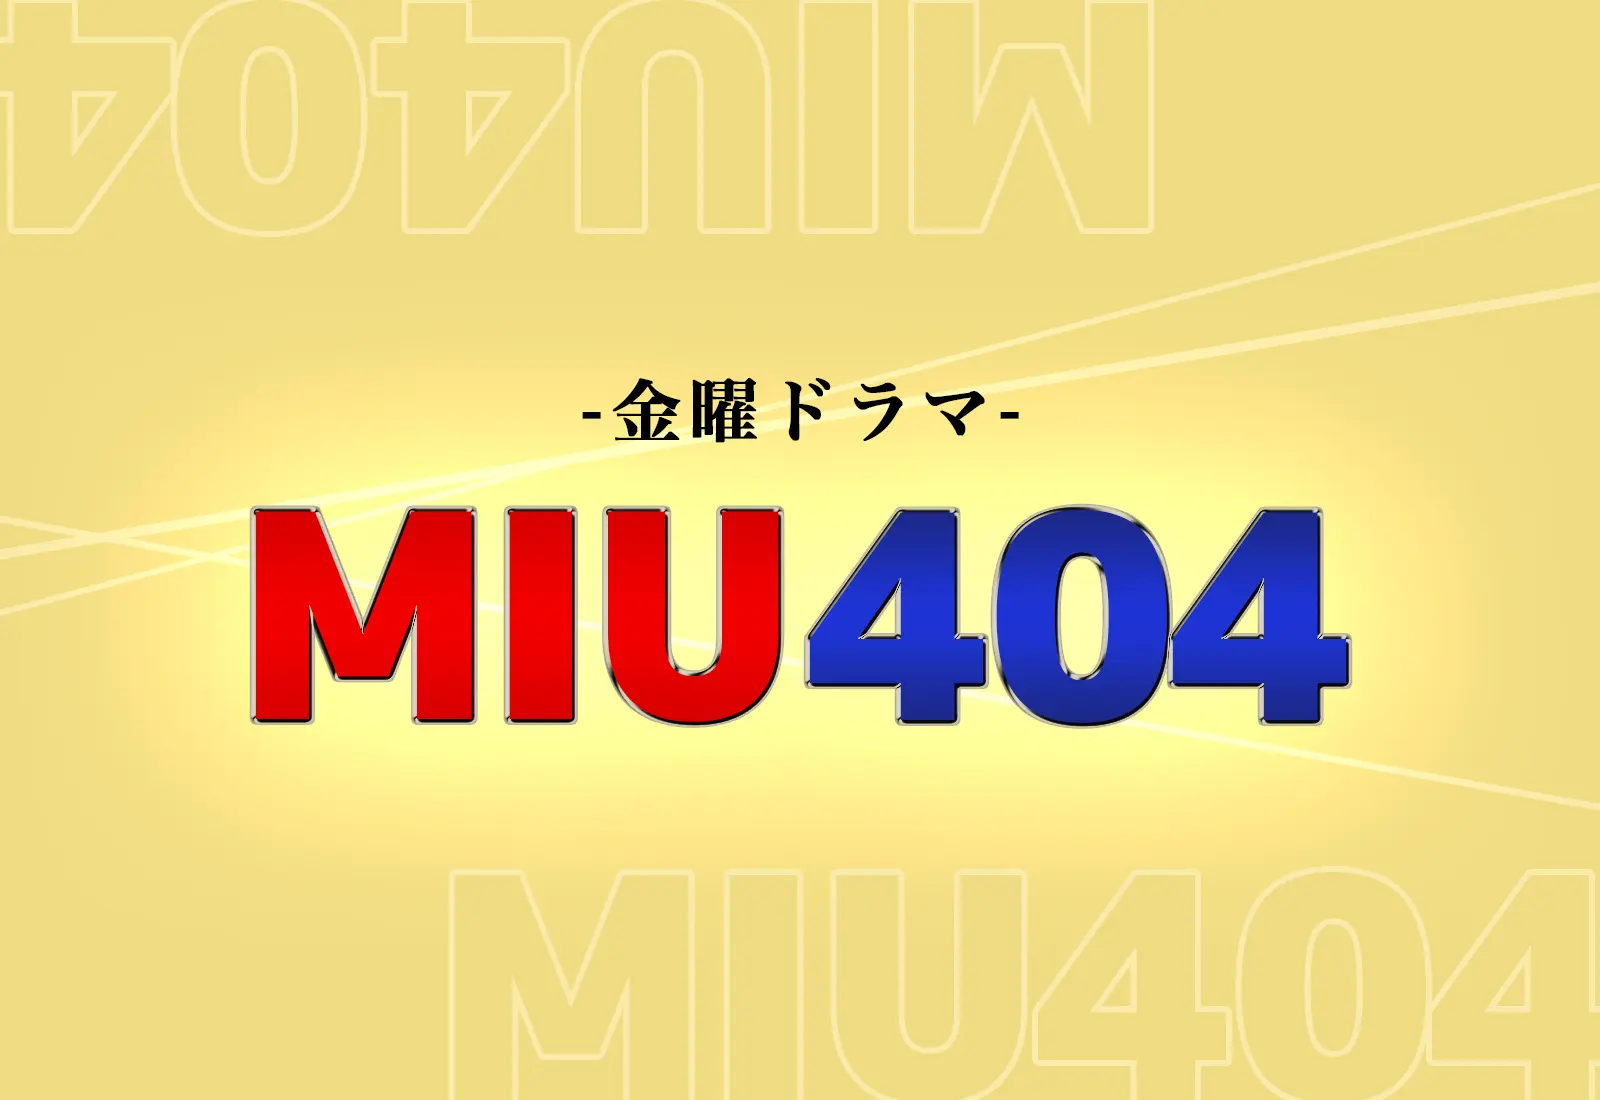 Miu404第2話ゲストキャスト 岸役は吉村卓也で動画見逃し配信も